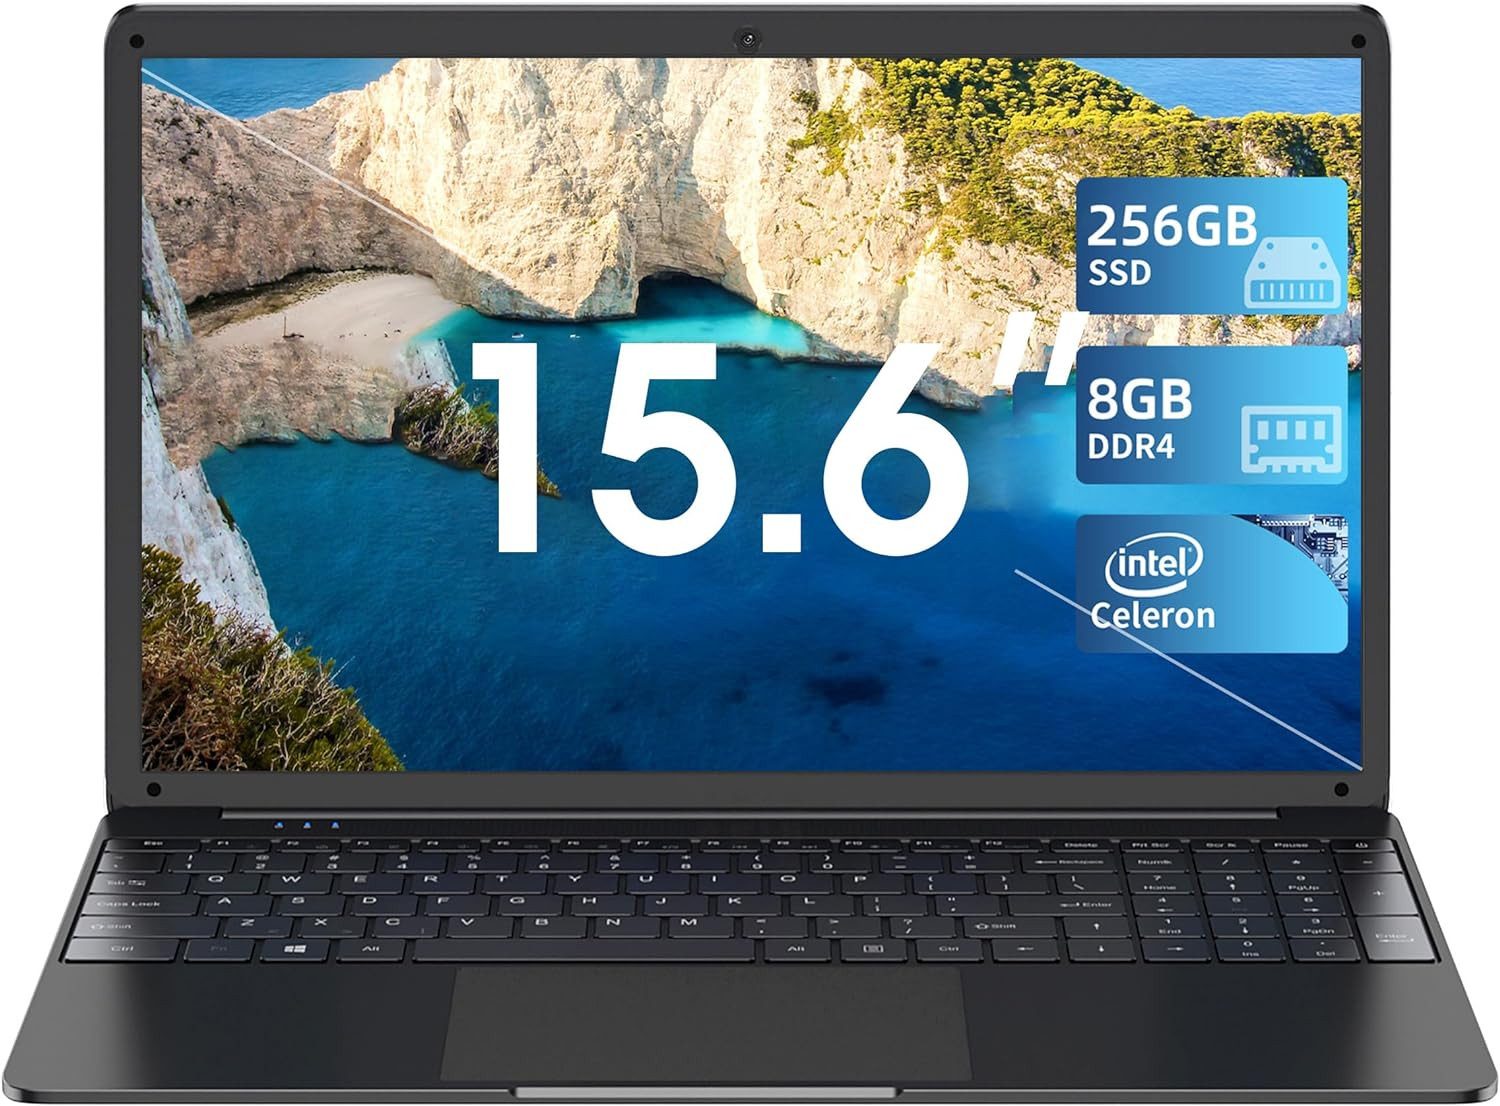 SGIN Leistungsstarke Konfiguration Notebook (Intel Celeron N4000, 256 GB SSD, 8GB RAM,Energiesparend, meistert komplexe Aufgaben, MicroSD-Steckplatz)